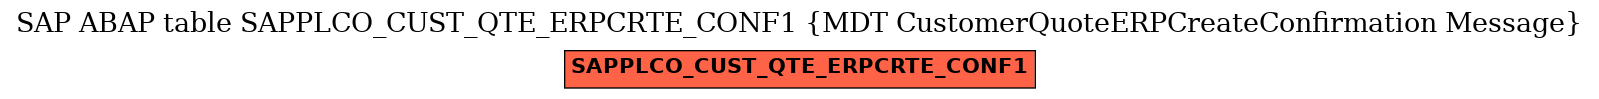 E-R Diagram for table SAPPLCO_CUST_QTE_ERPCRTE_CONF1 (MDT CustomerQuoteERPCreateConfirmation Message)